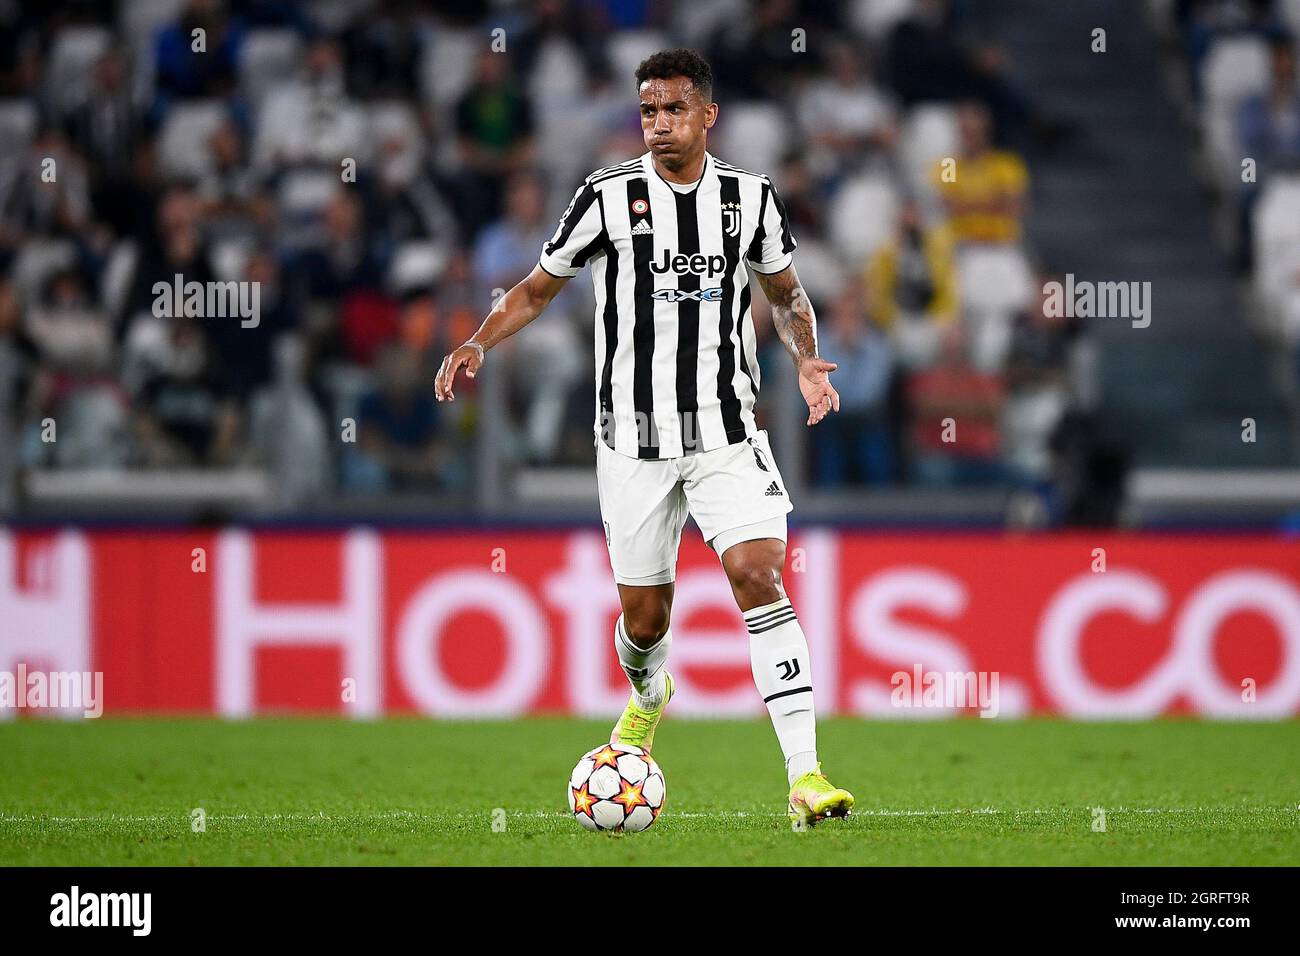 Turin, Italy. 29 September 2021. Danilo Luiz da Silva of Juventus FC during  the UEFA Champions